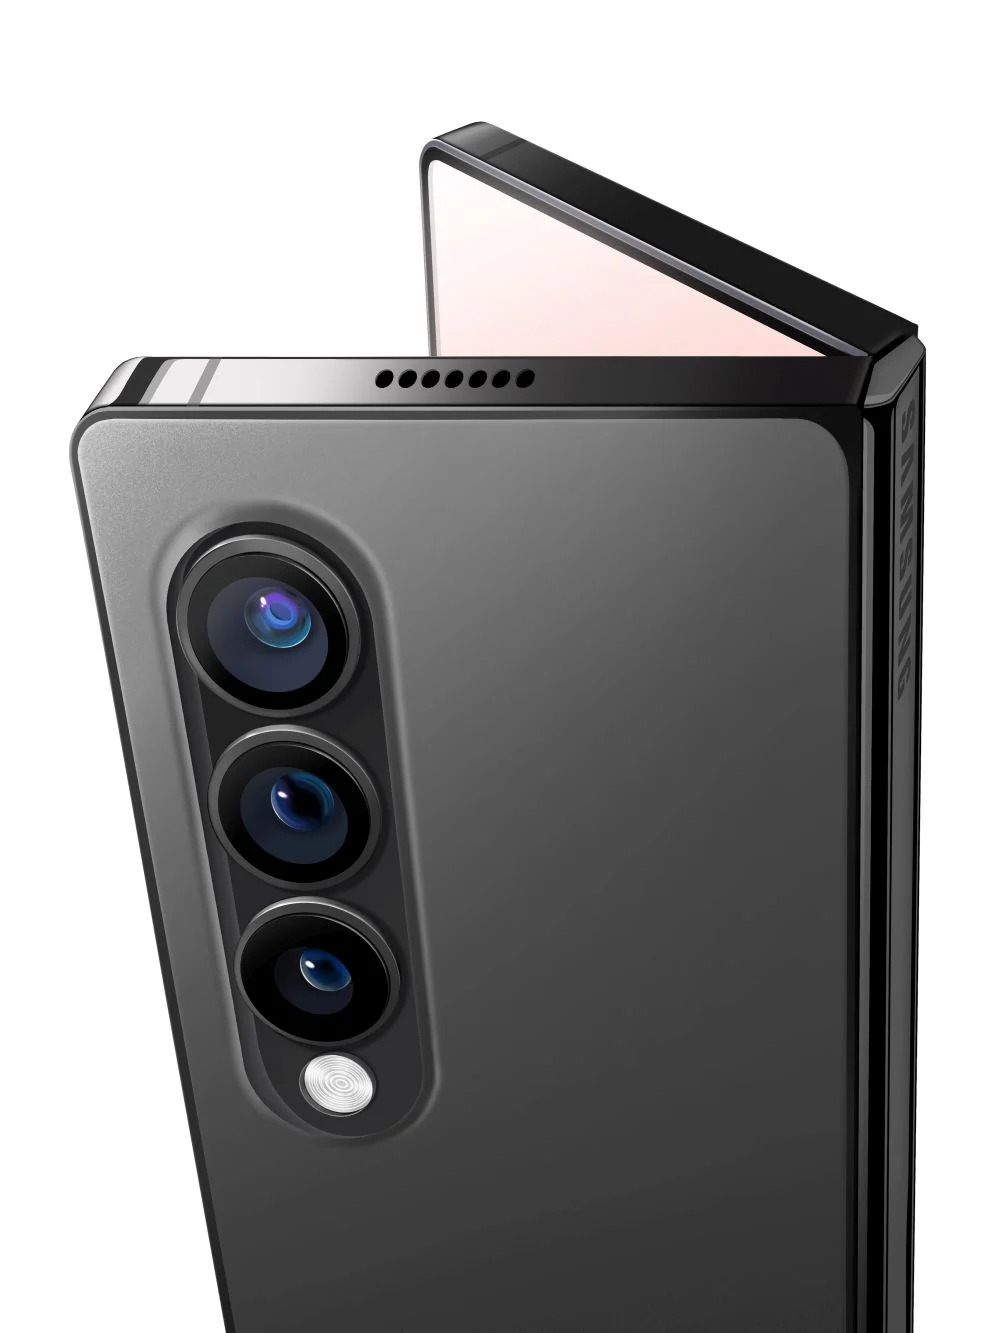 Samsung Galaxy Z Fold 3 concept renders show flat-edge design of the  smartphone - Gizmochina